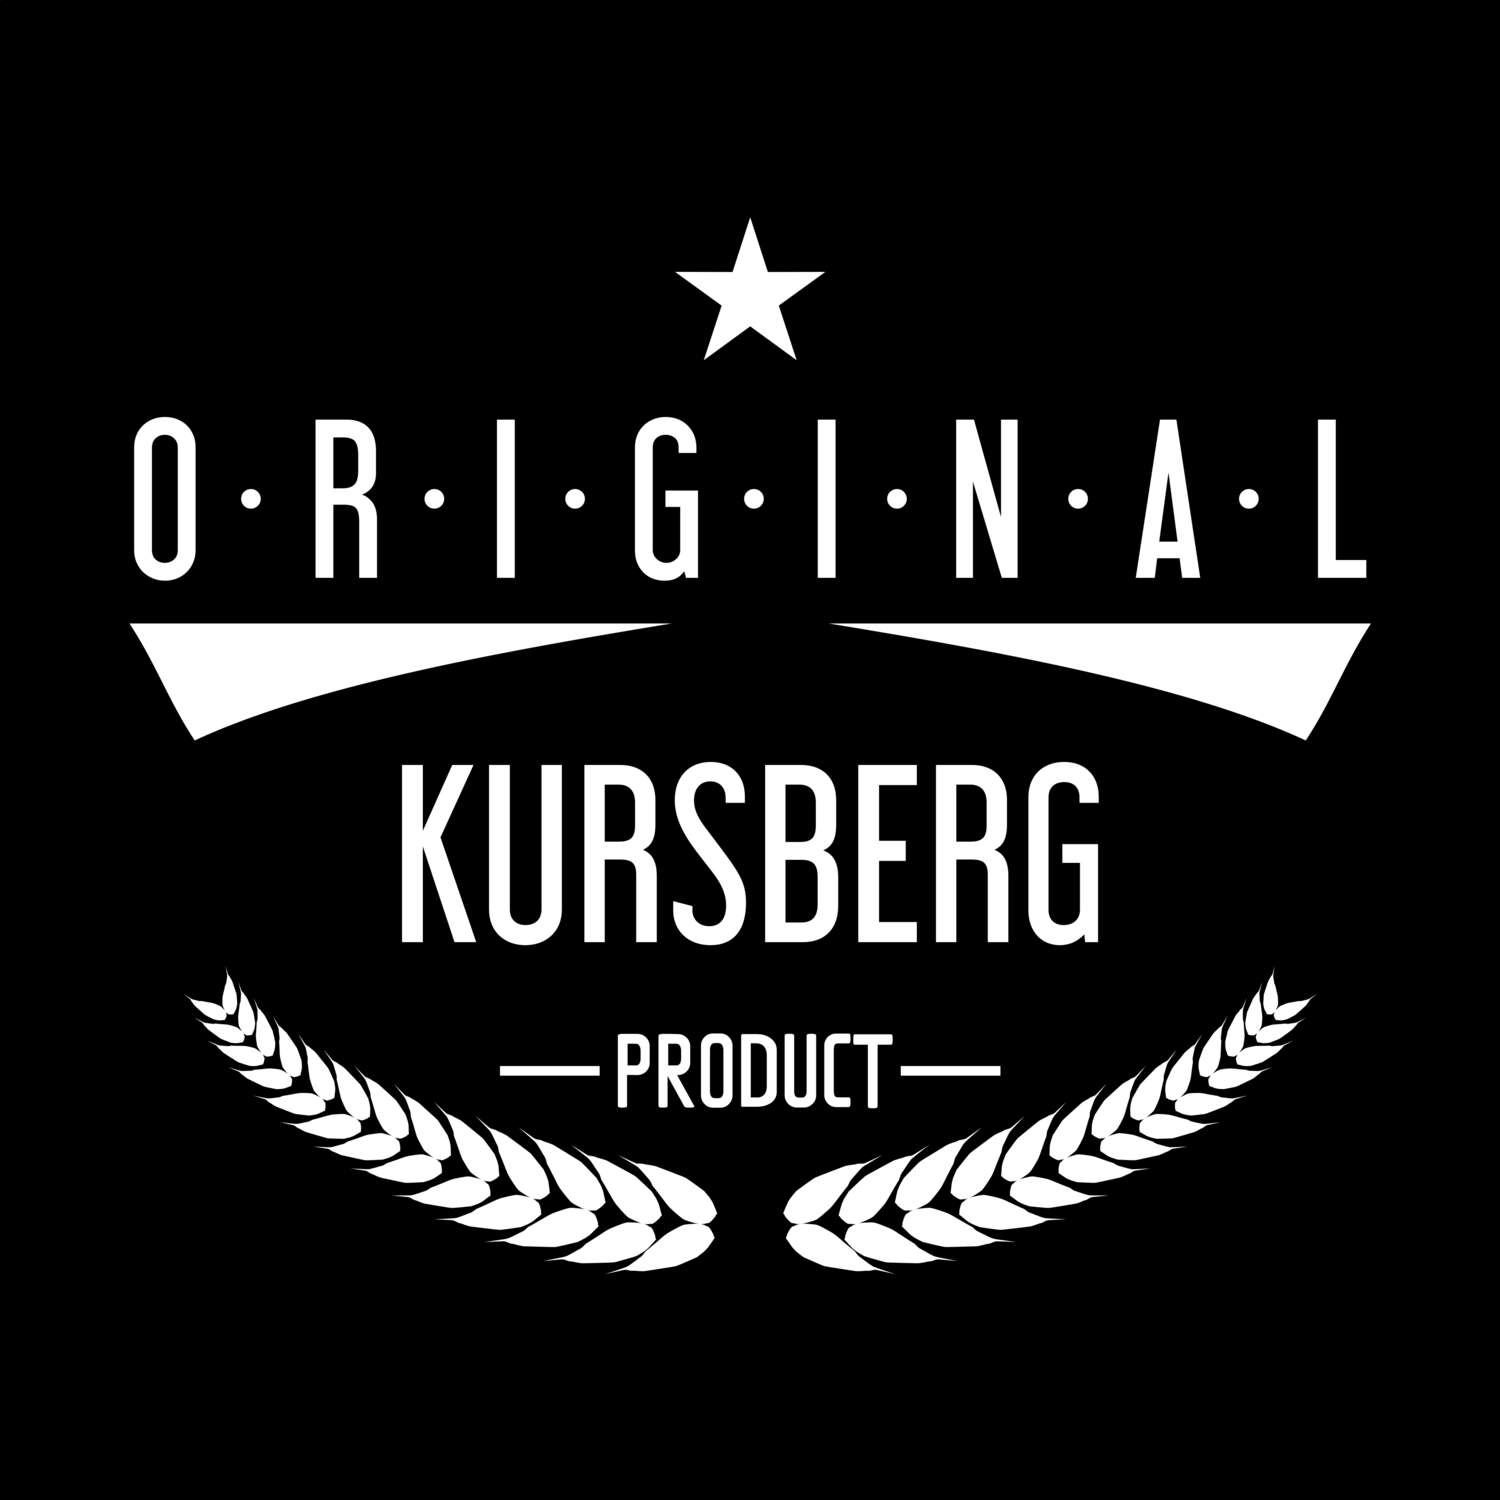 Kursberg T-Shirt »Original Product«